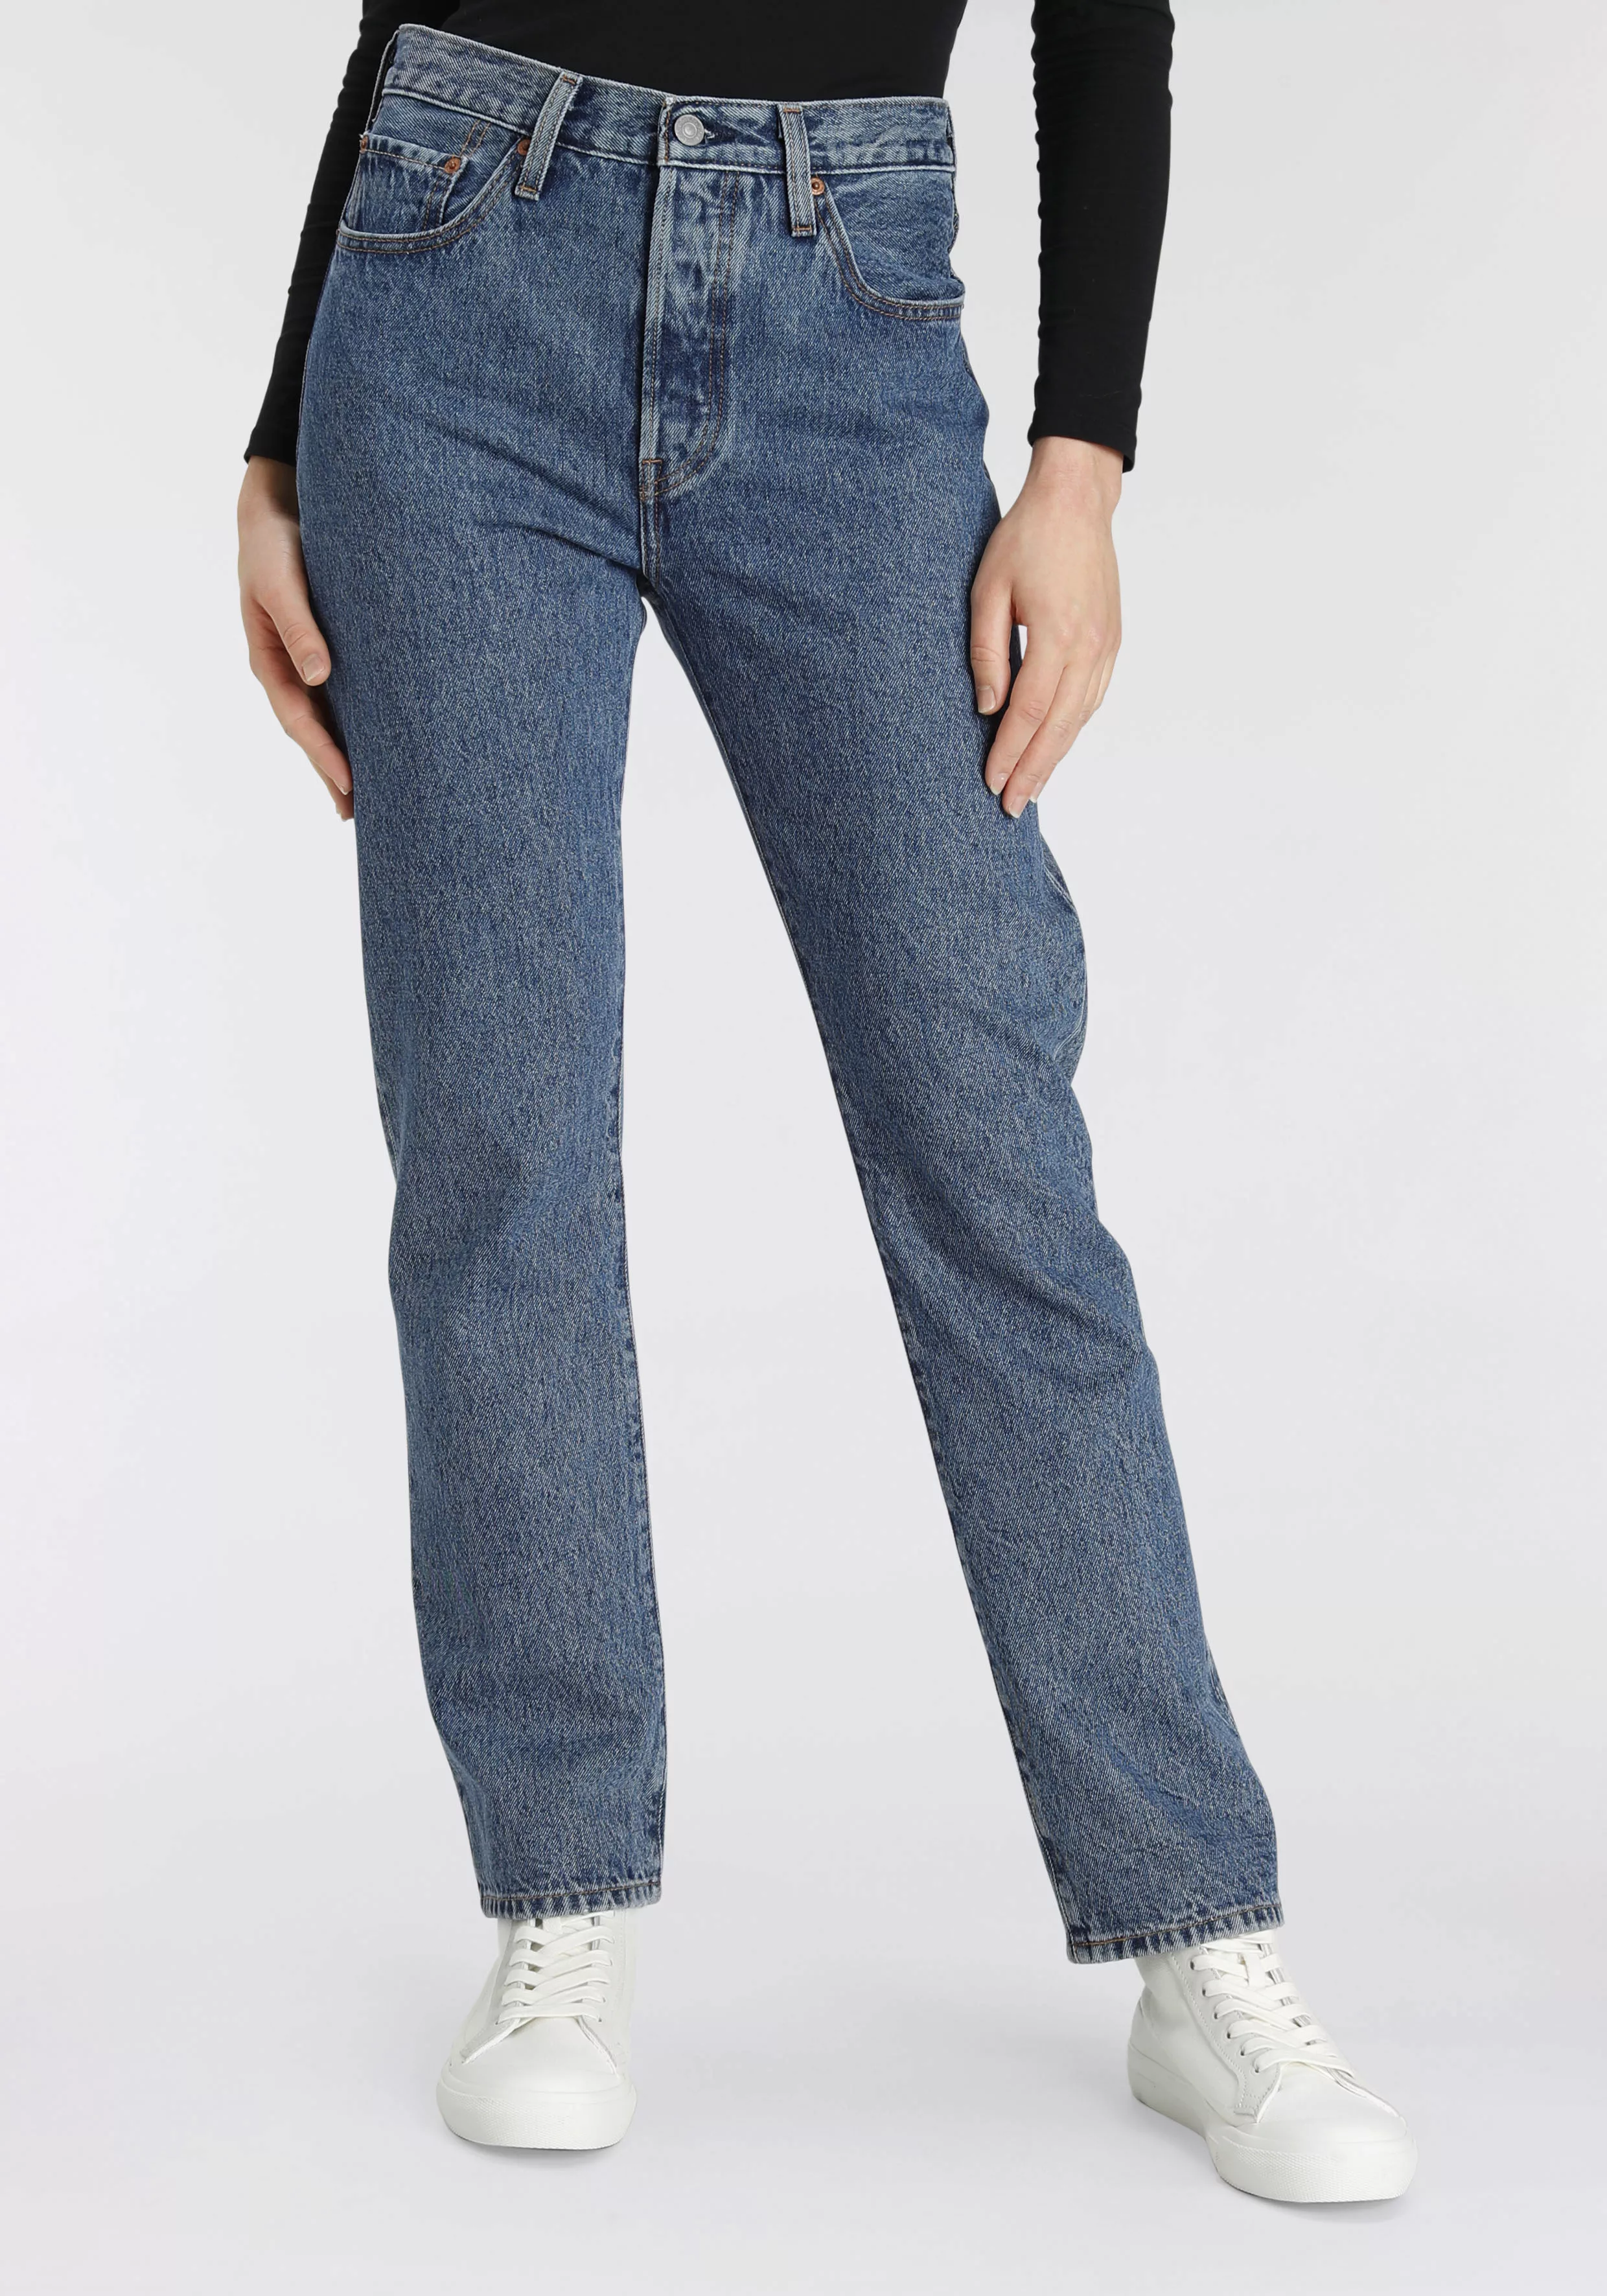 Levis 5-Pocket-Jeans "501 Long", 501 Collection günstig online kaufen